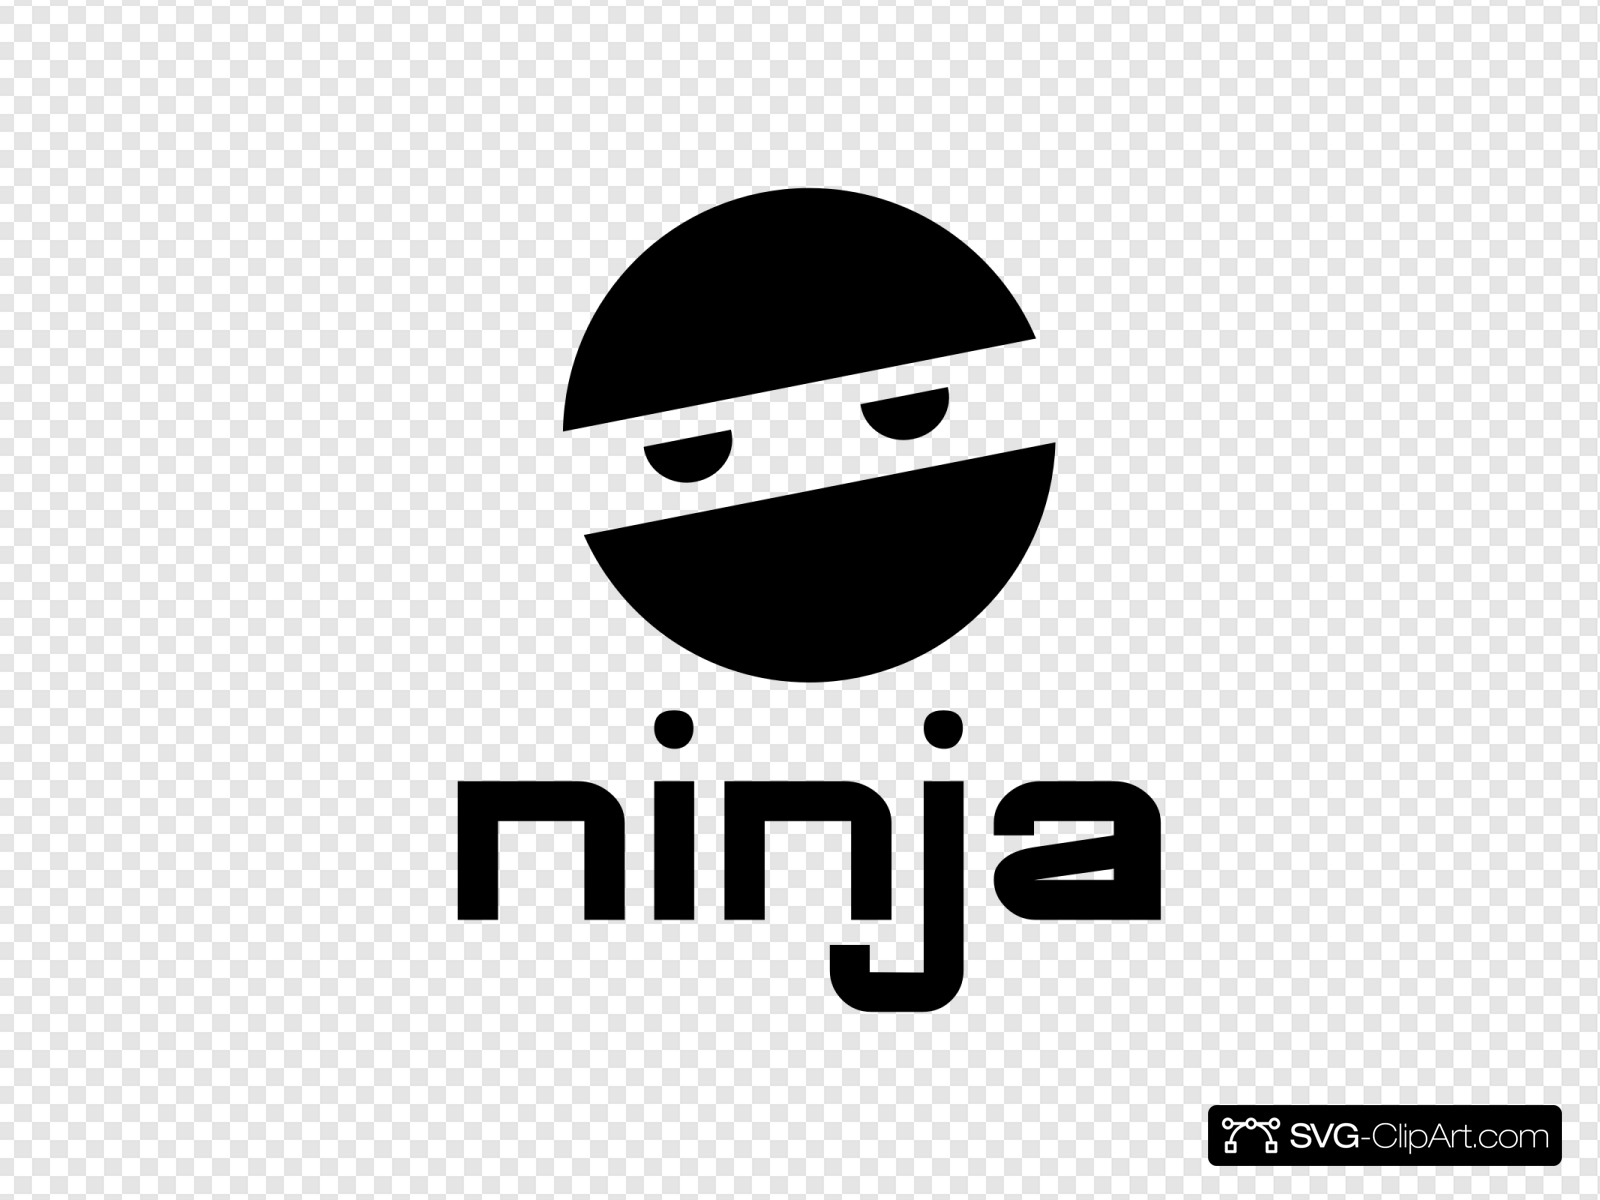 Ninja Clip art, Icon and SVG